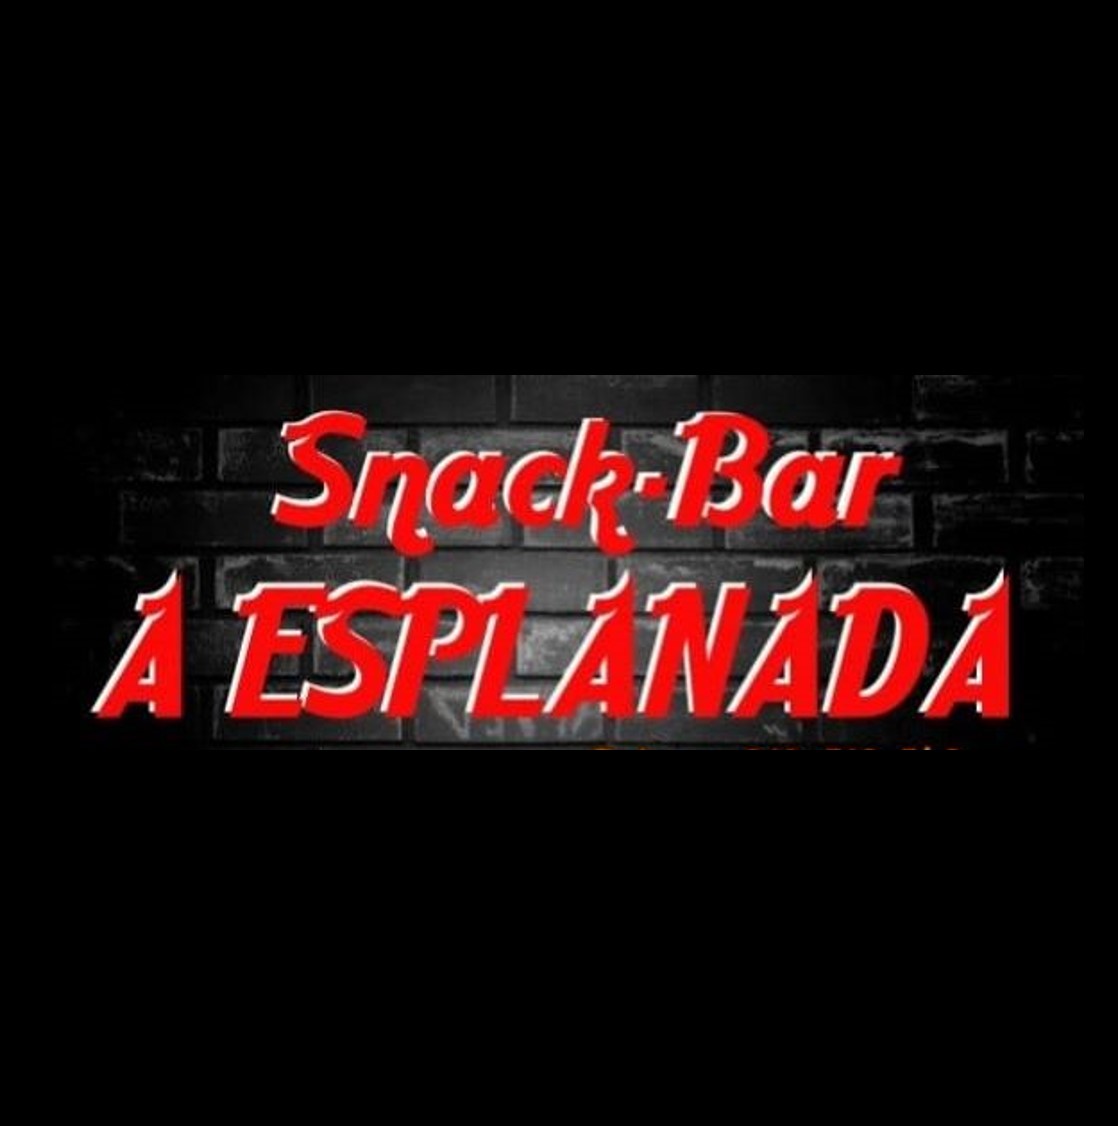 Snack-Bar A Esplanada